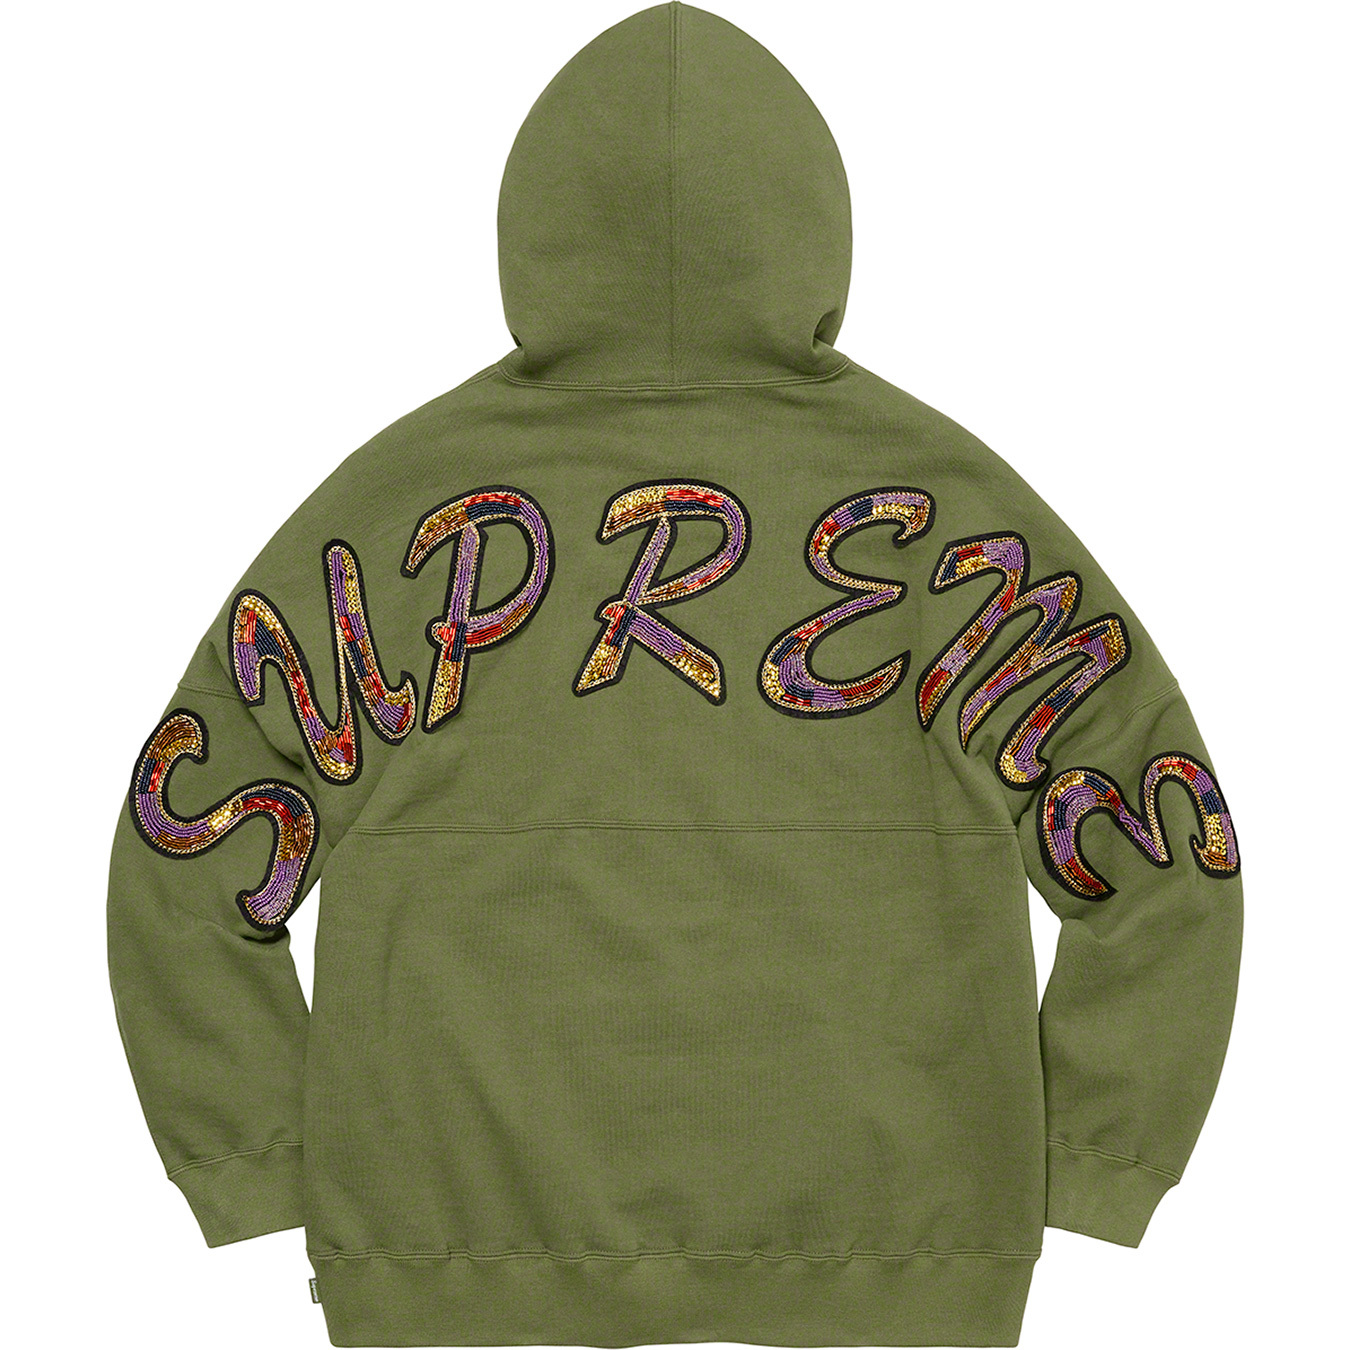 supreme シュプリーム✴︎beaded hooded sweatshirt パーカー トップス メンズ リアル